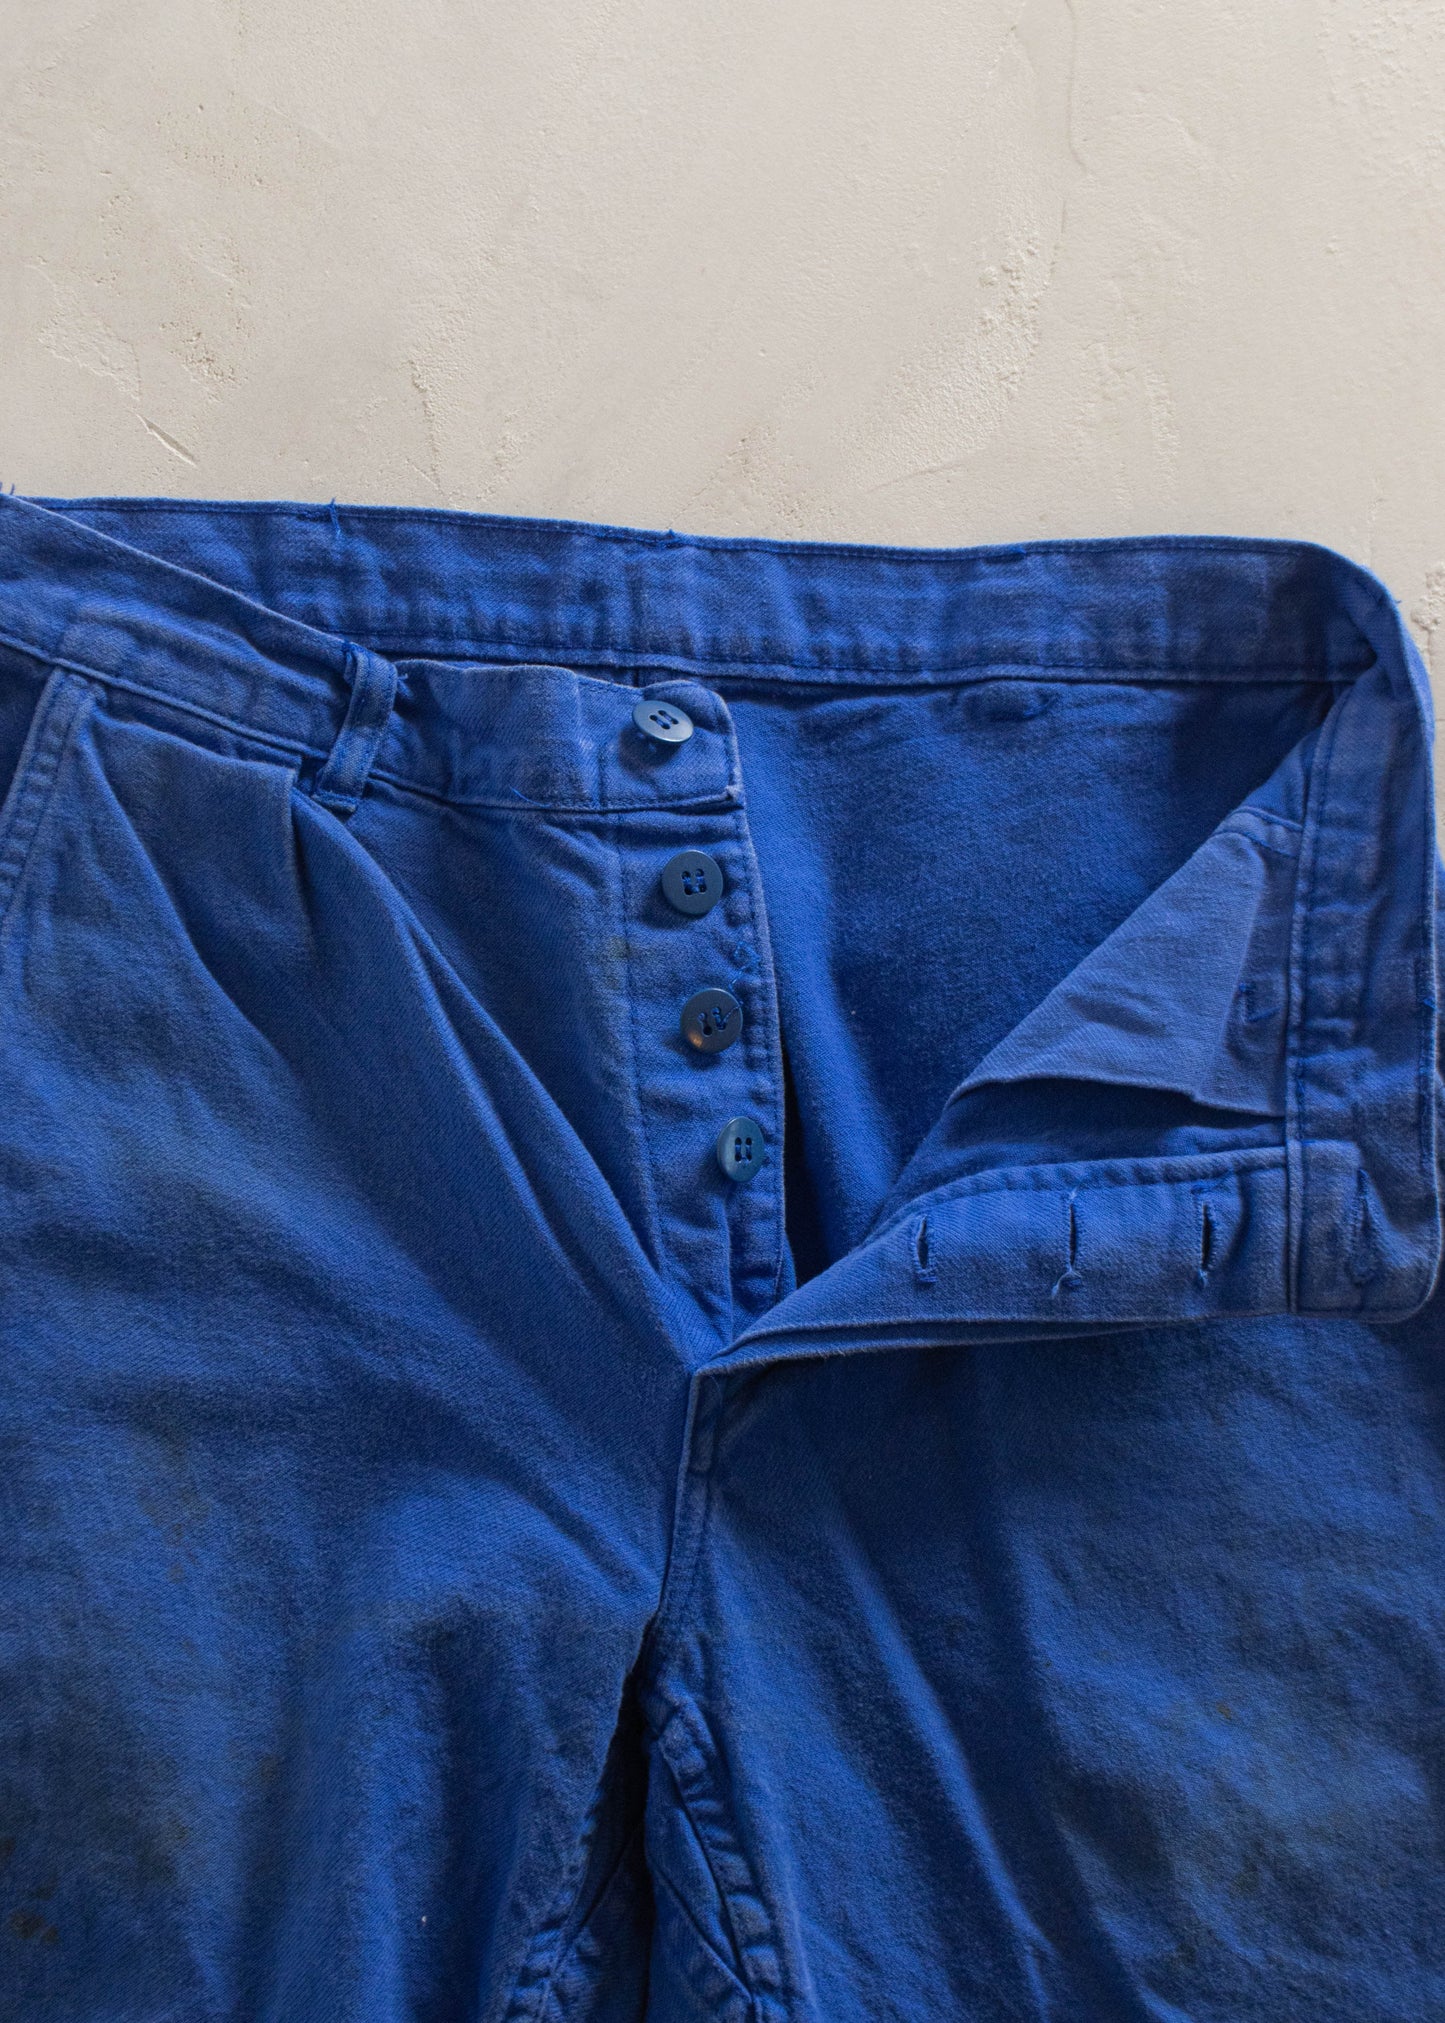 1980s Berjac French Workwear Chore Pants Size Women's 29 Men's 32